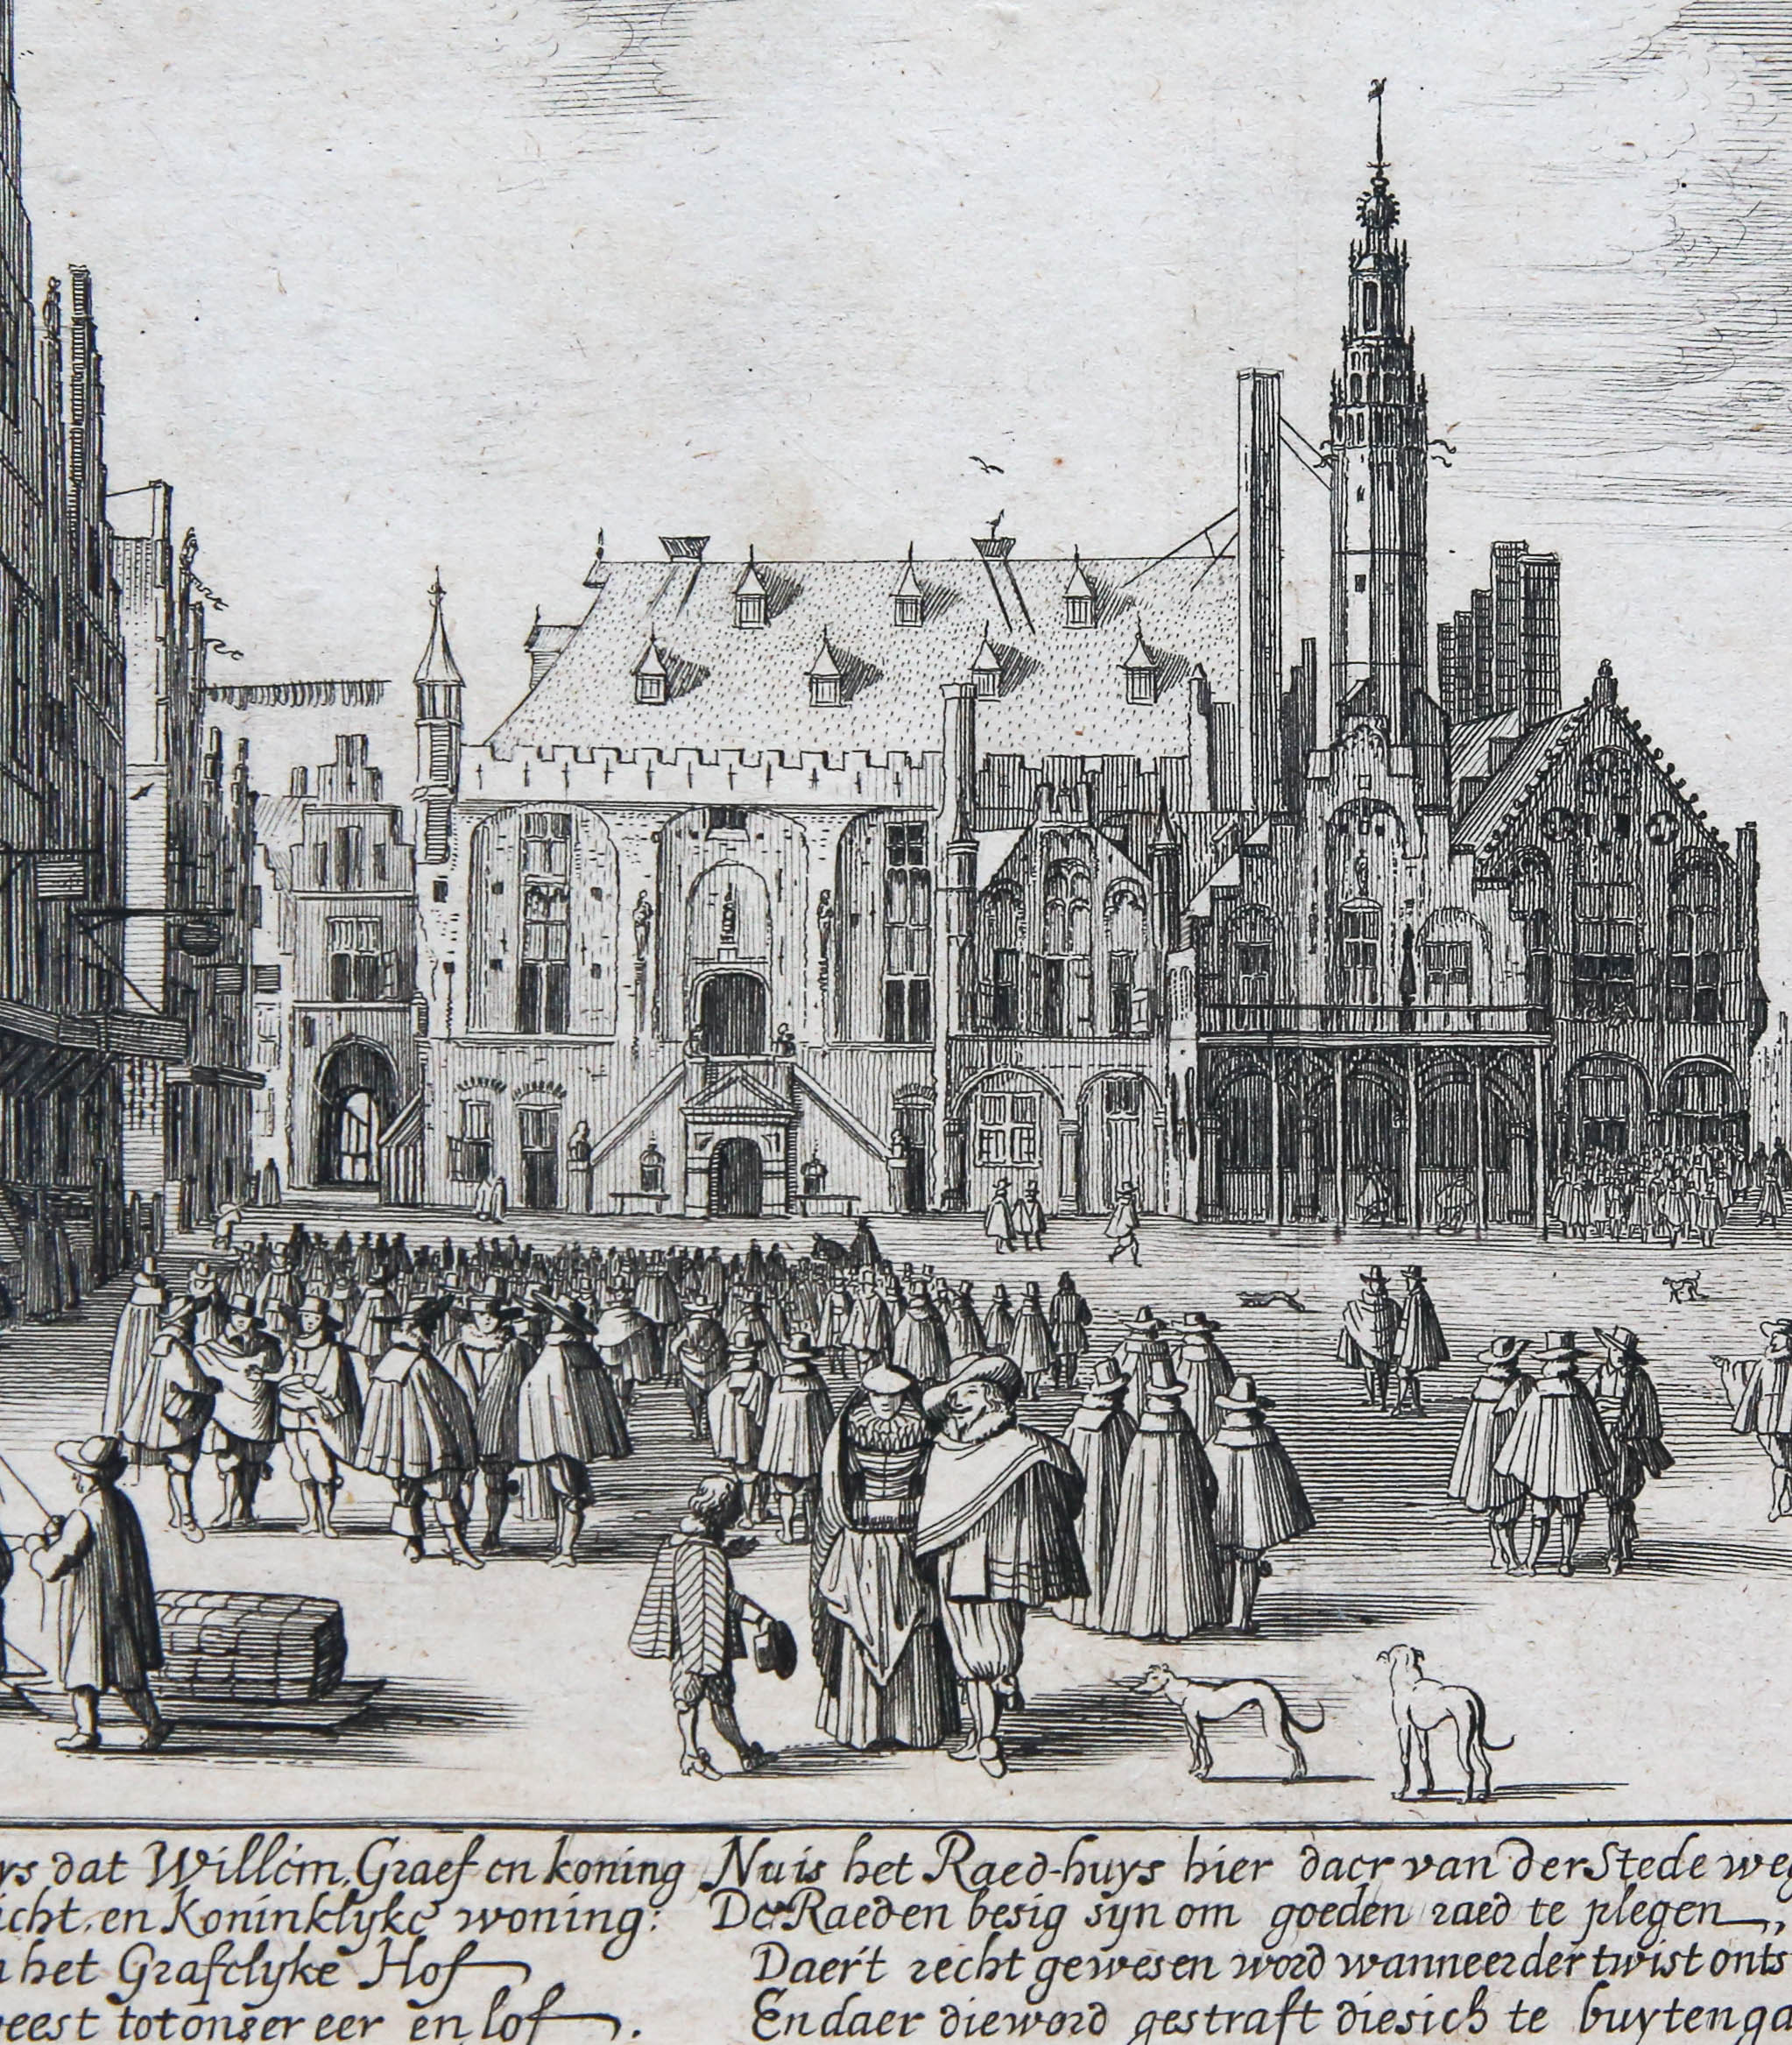 Print. V.d. Velde: Haarlem's Grote Markt with the Townhall/Grote Markt Haarlem